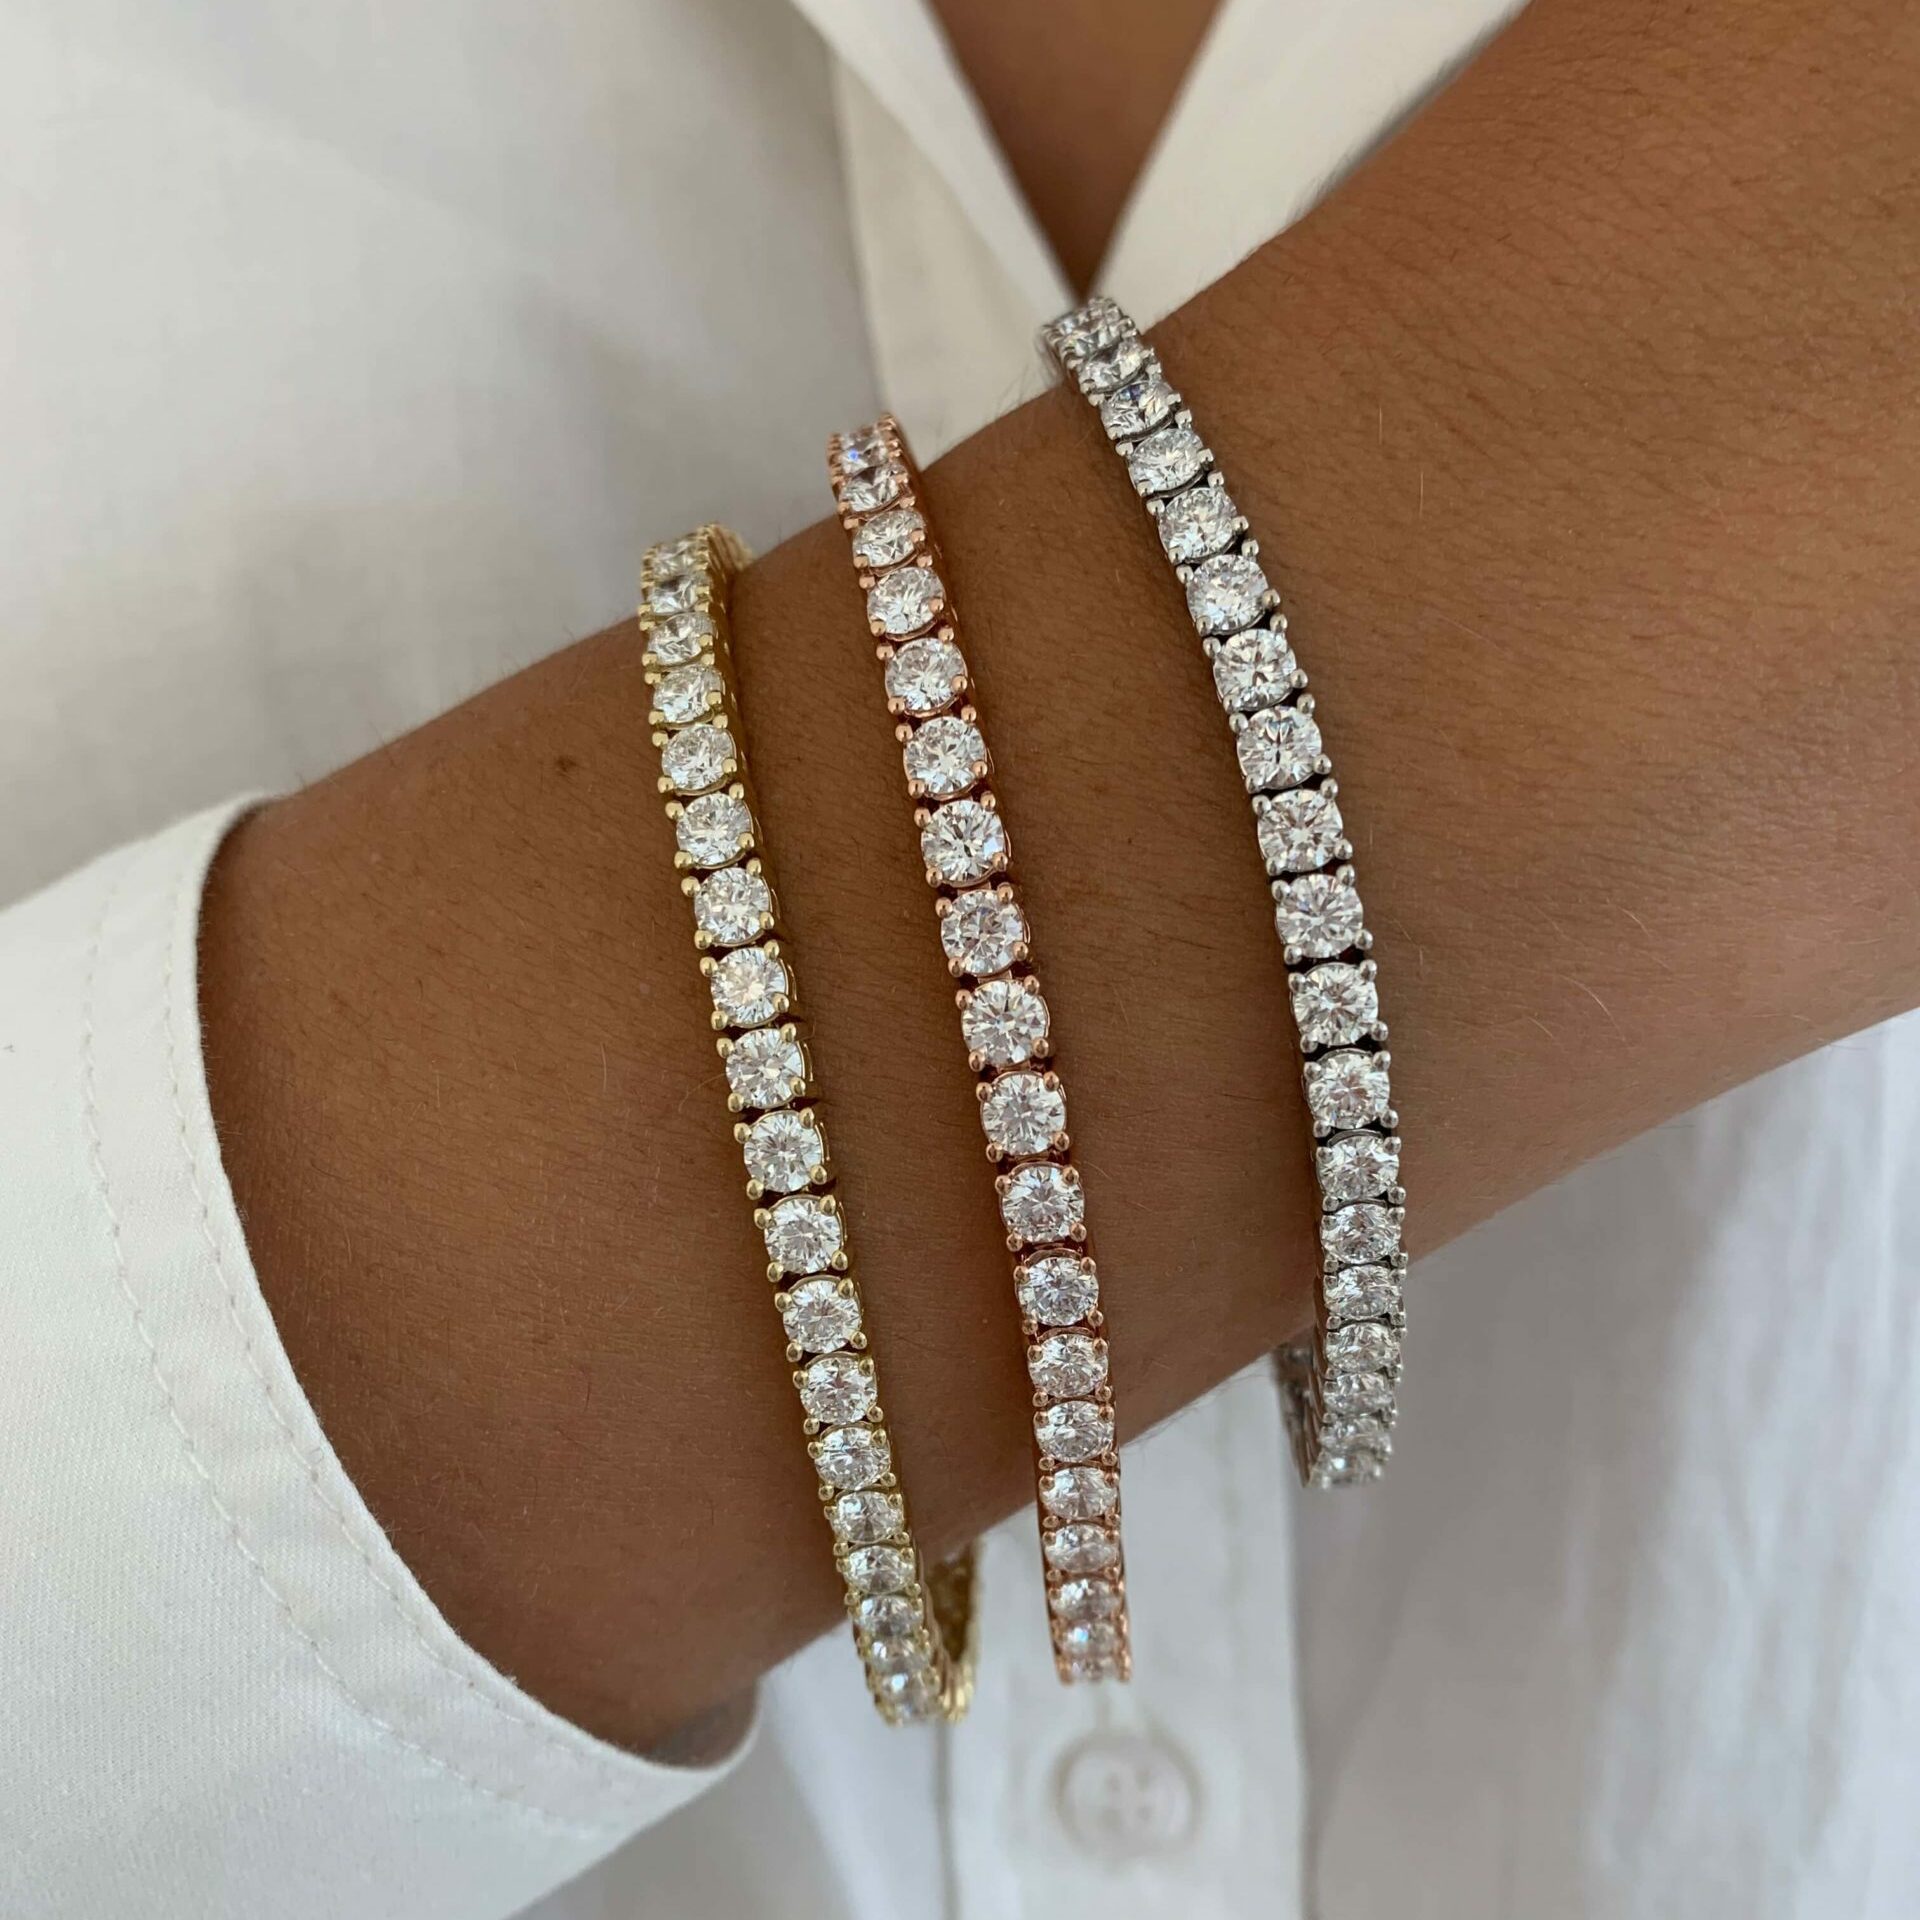 6 Ct Princess Lab Created Diamond Tennis Bracelet 14K White Gold Plated  Silver | eBay